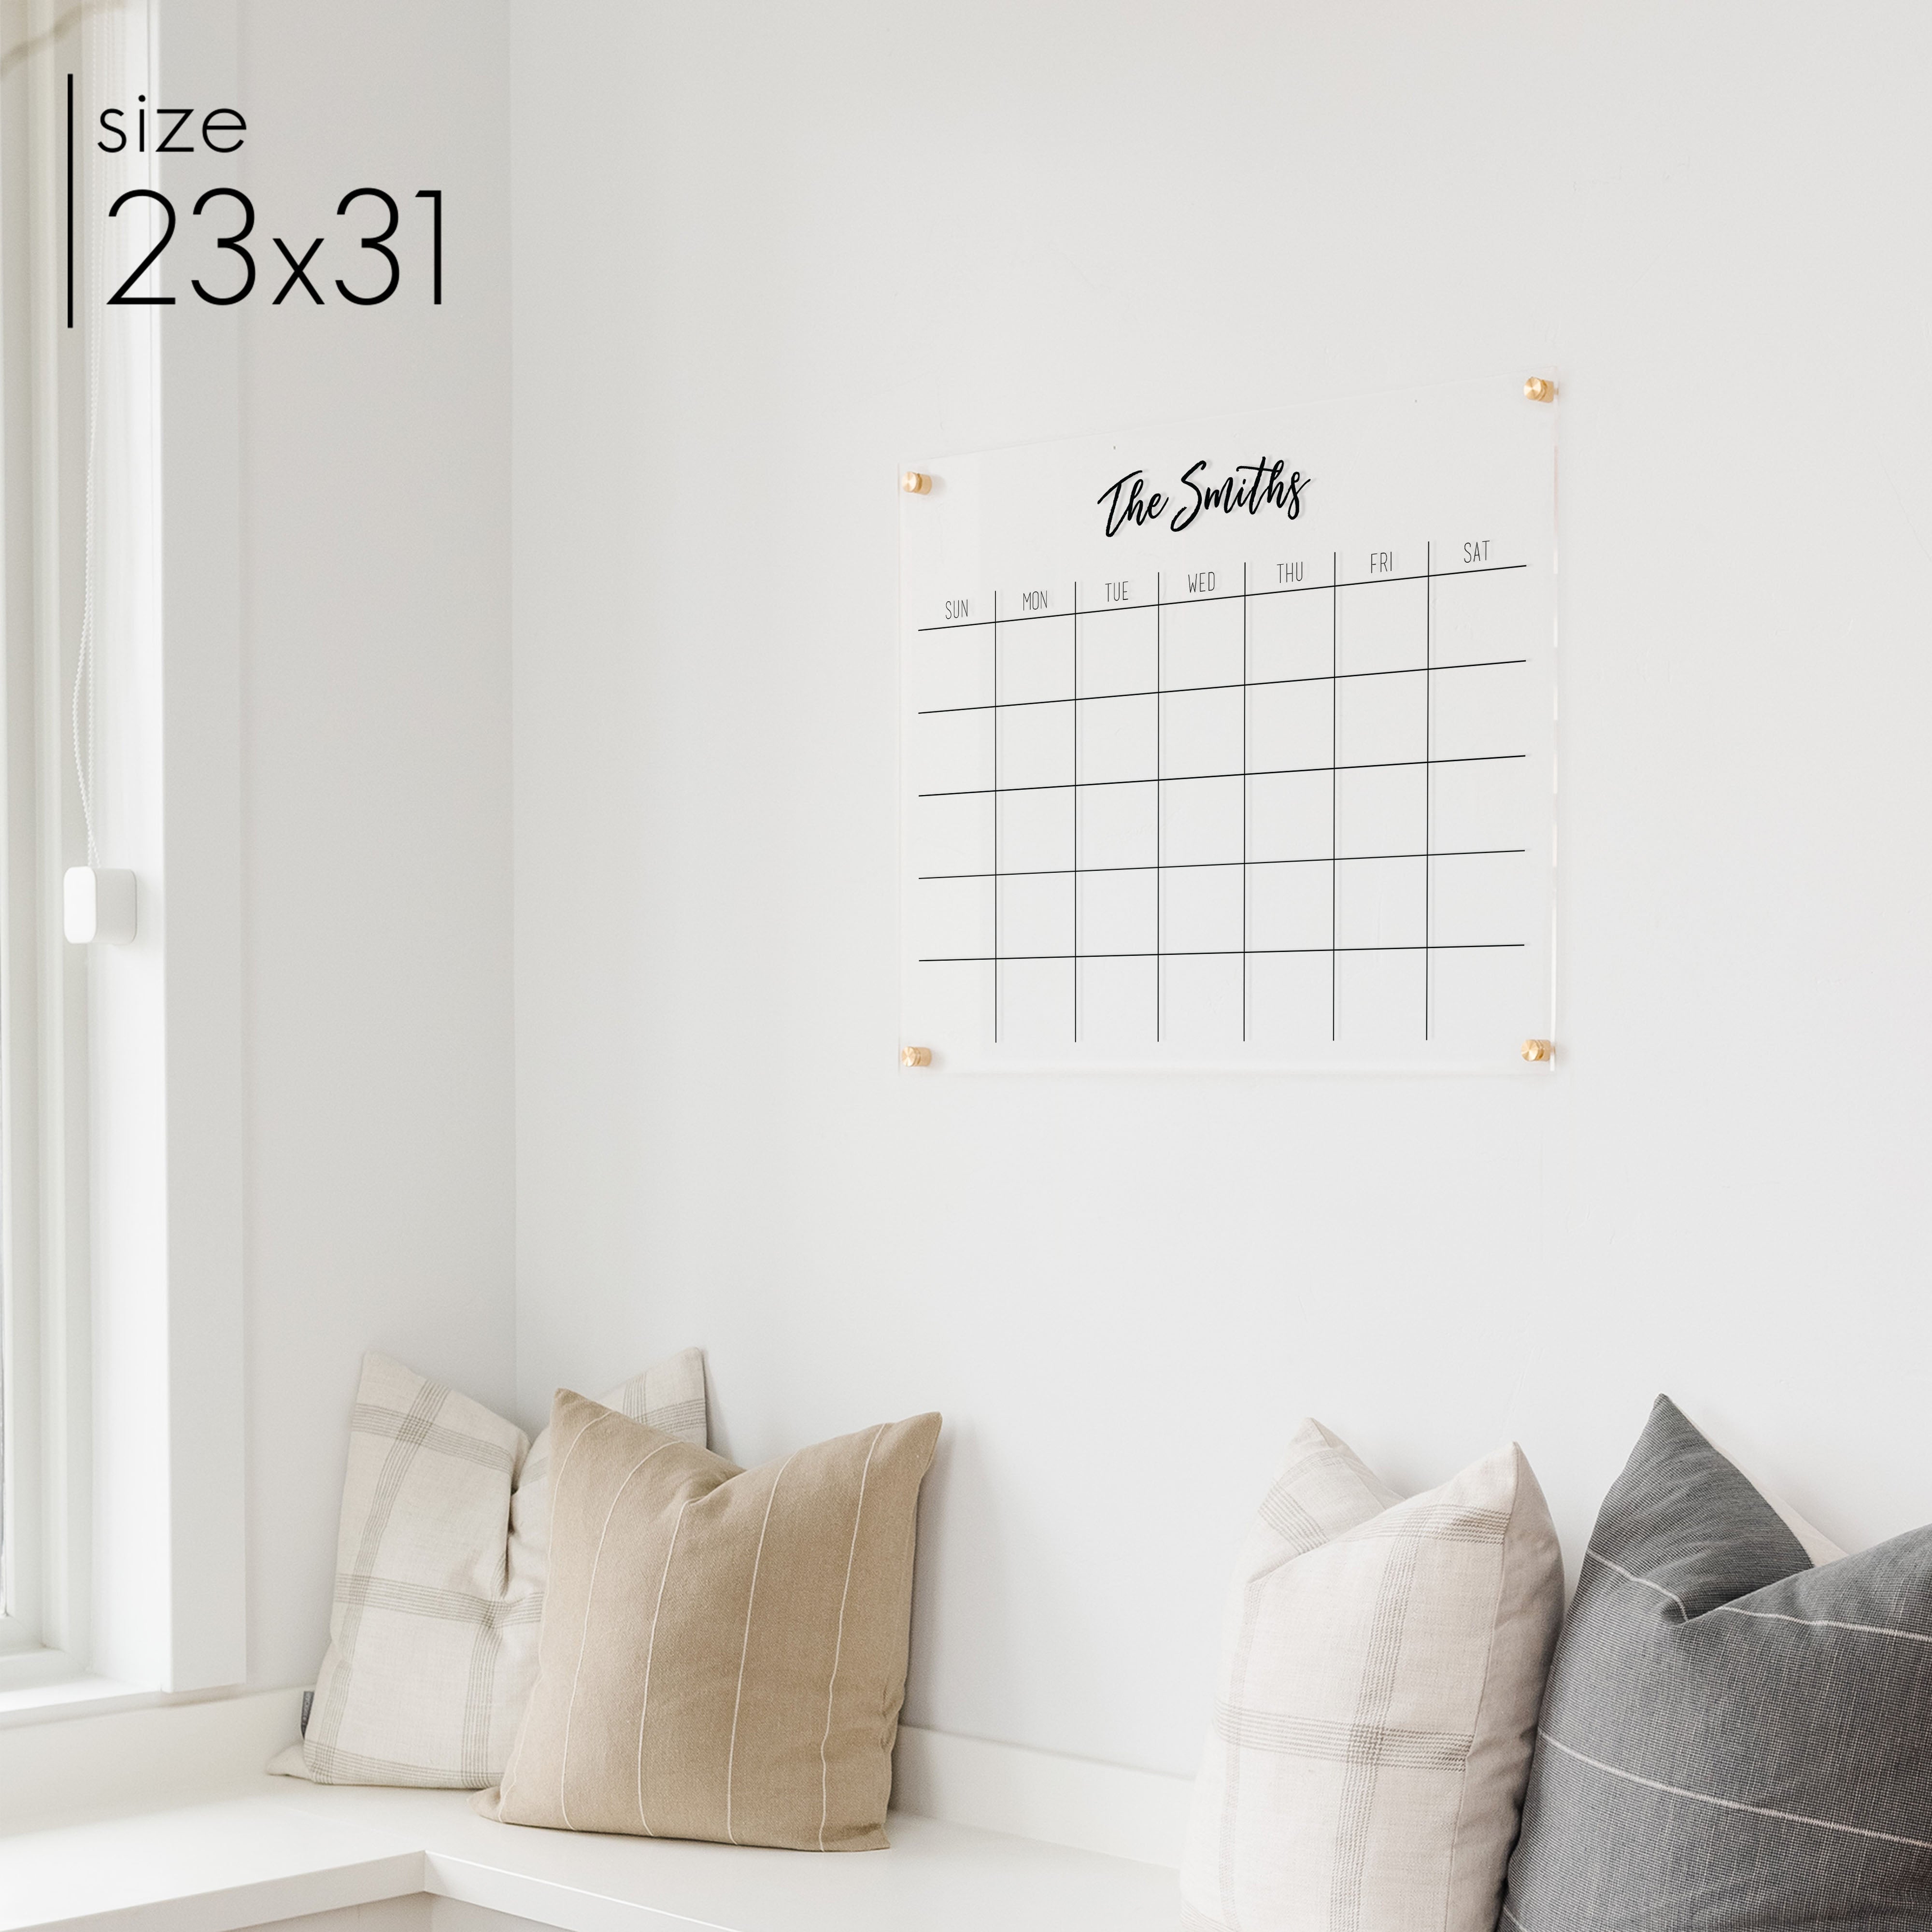 Monthly Square Acrylic Calendar | Square Traeger